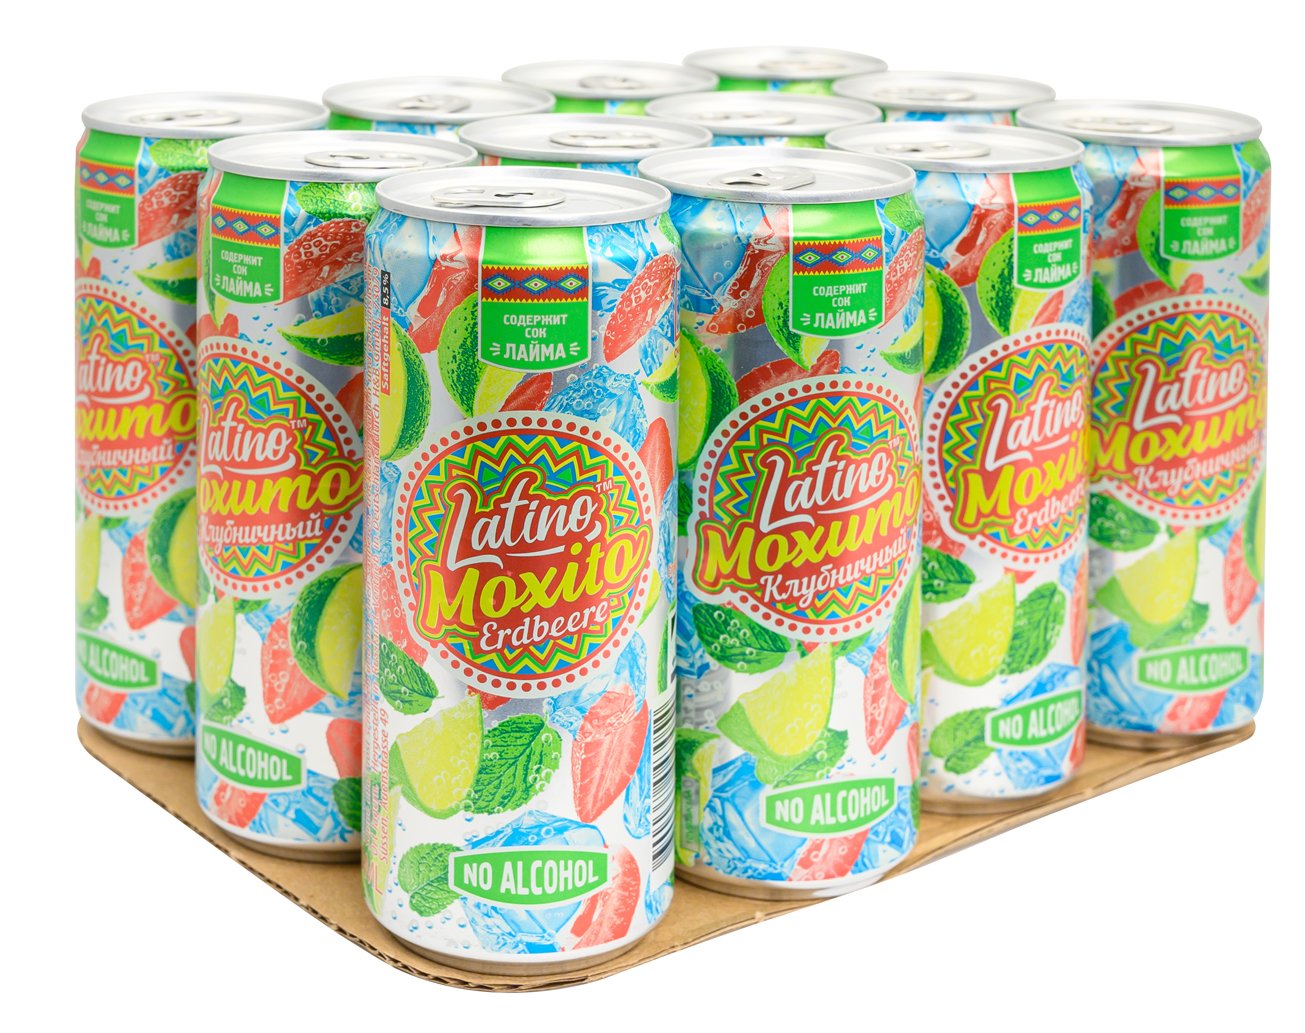 12er Pack Latino Moxito Erdbeere mit Limette 330ml inkl. Pfand